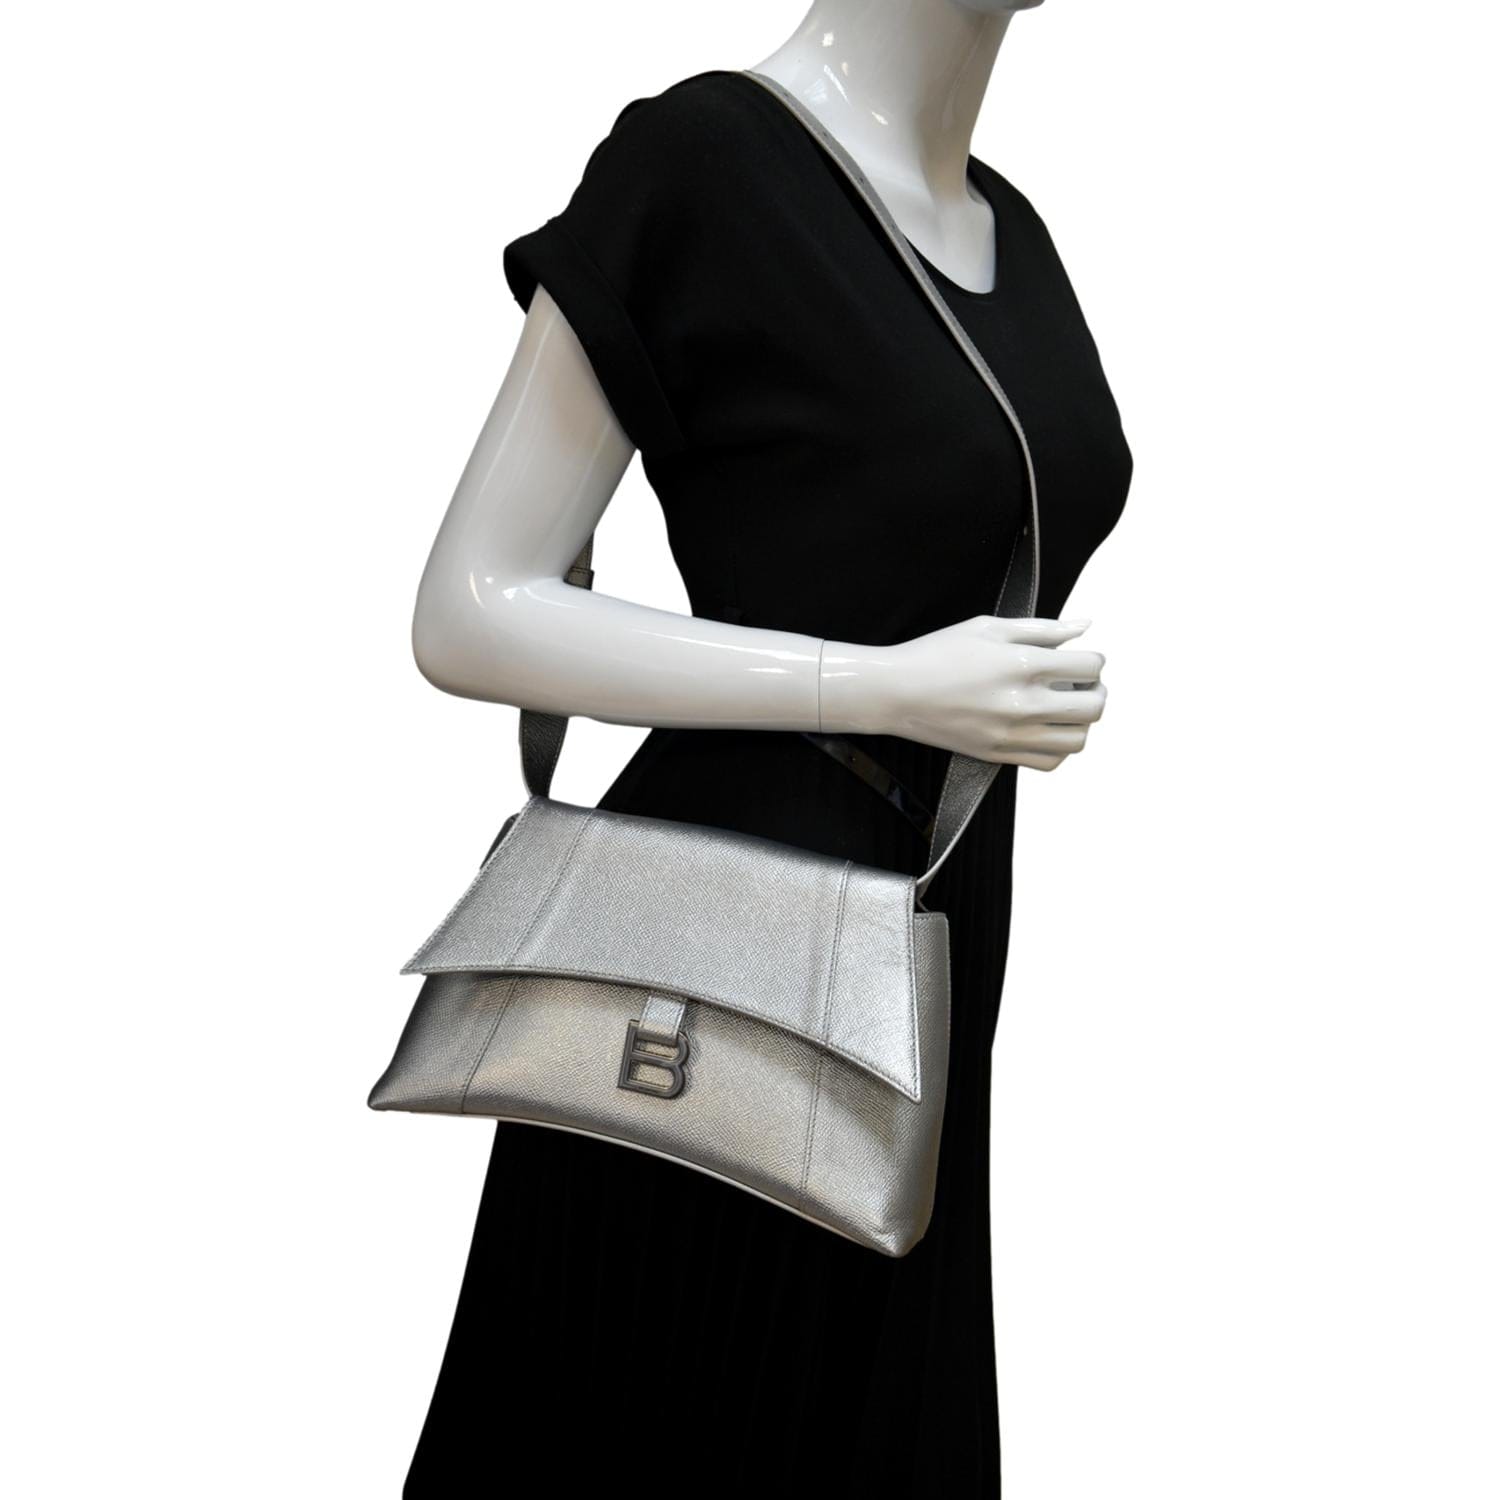 Balenciaga Leather Shoulder Handbags